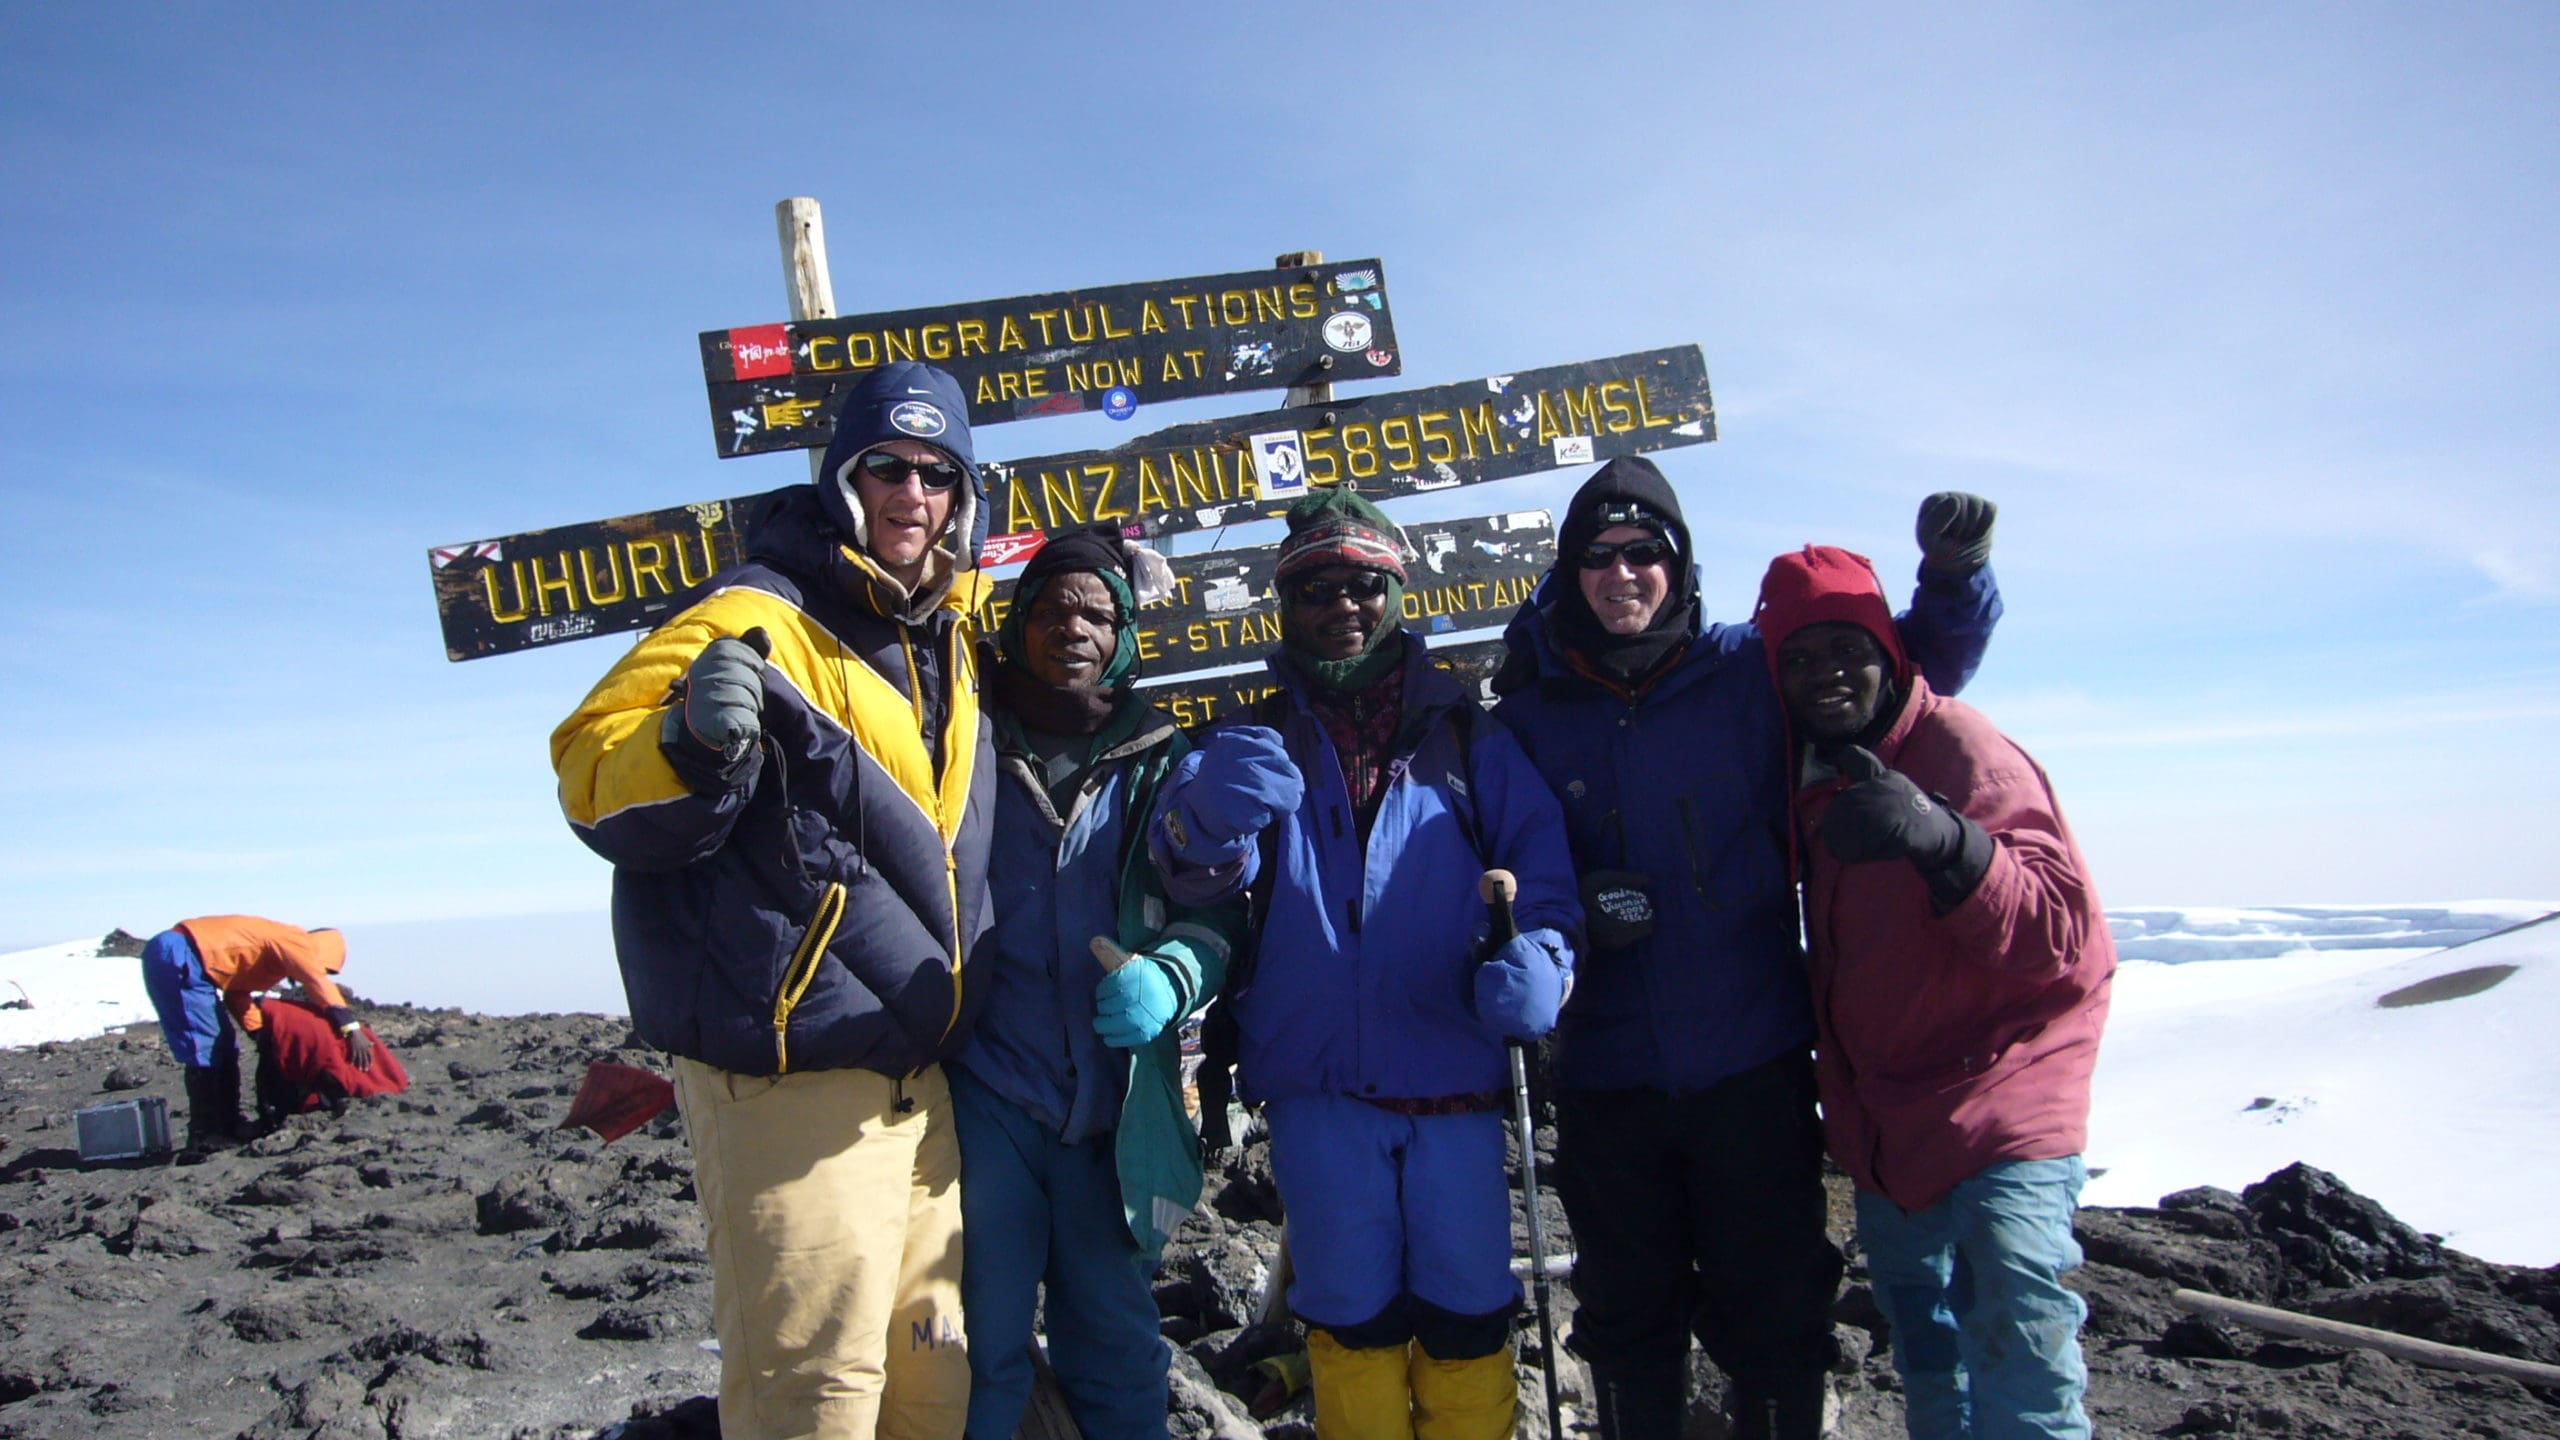 Kilimanjaro, Zdeno Chara